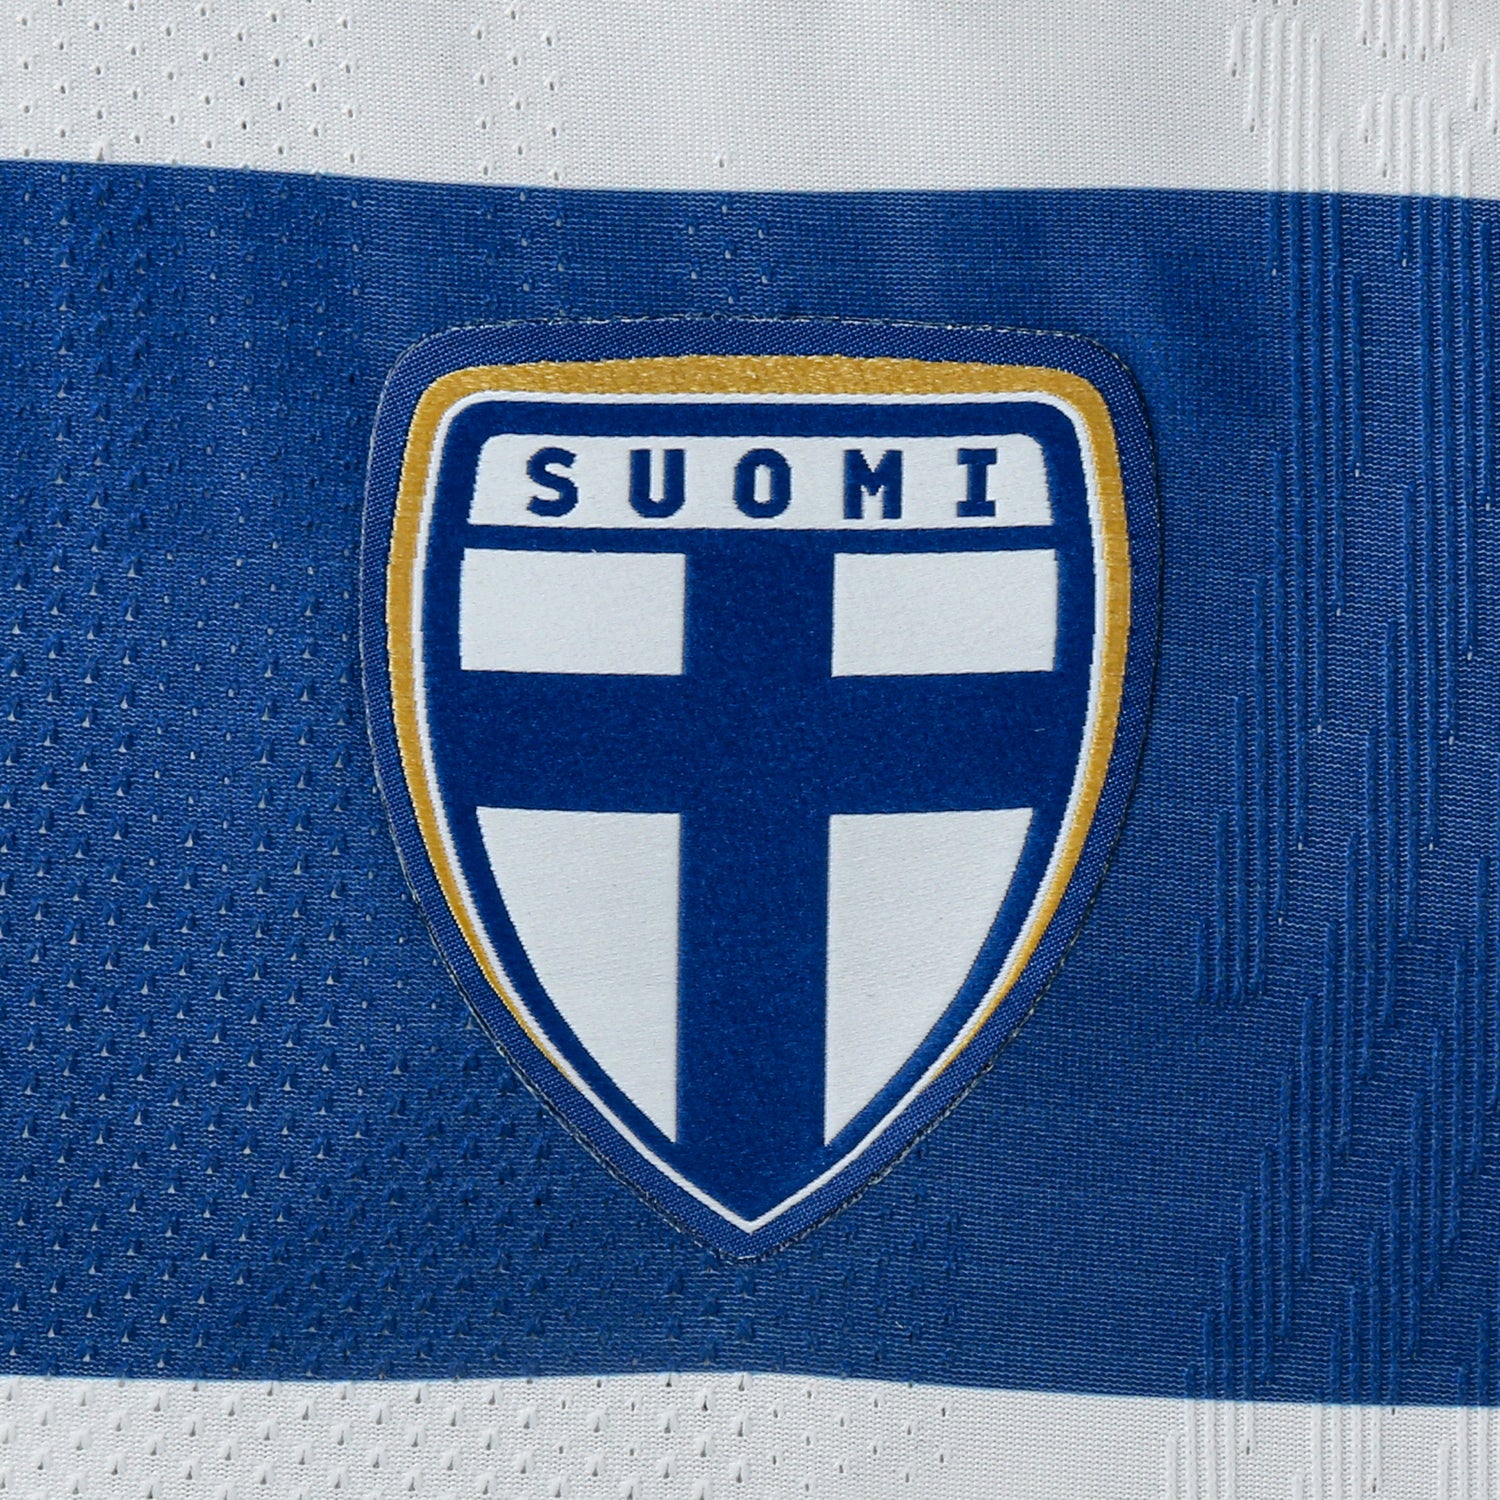 Finland Official Home Jersey 2022/23, Lappalainen print